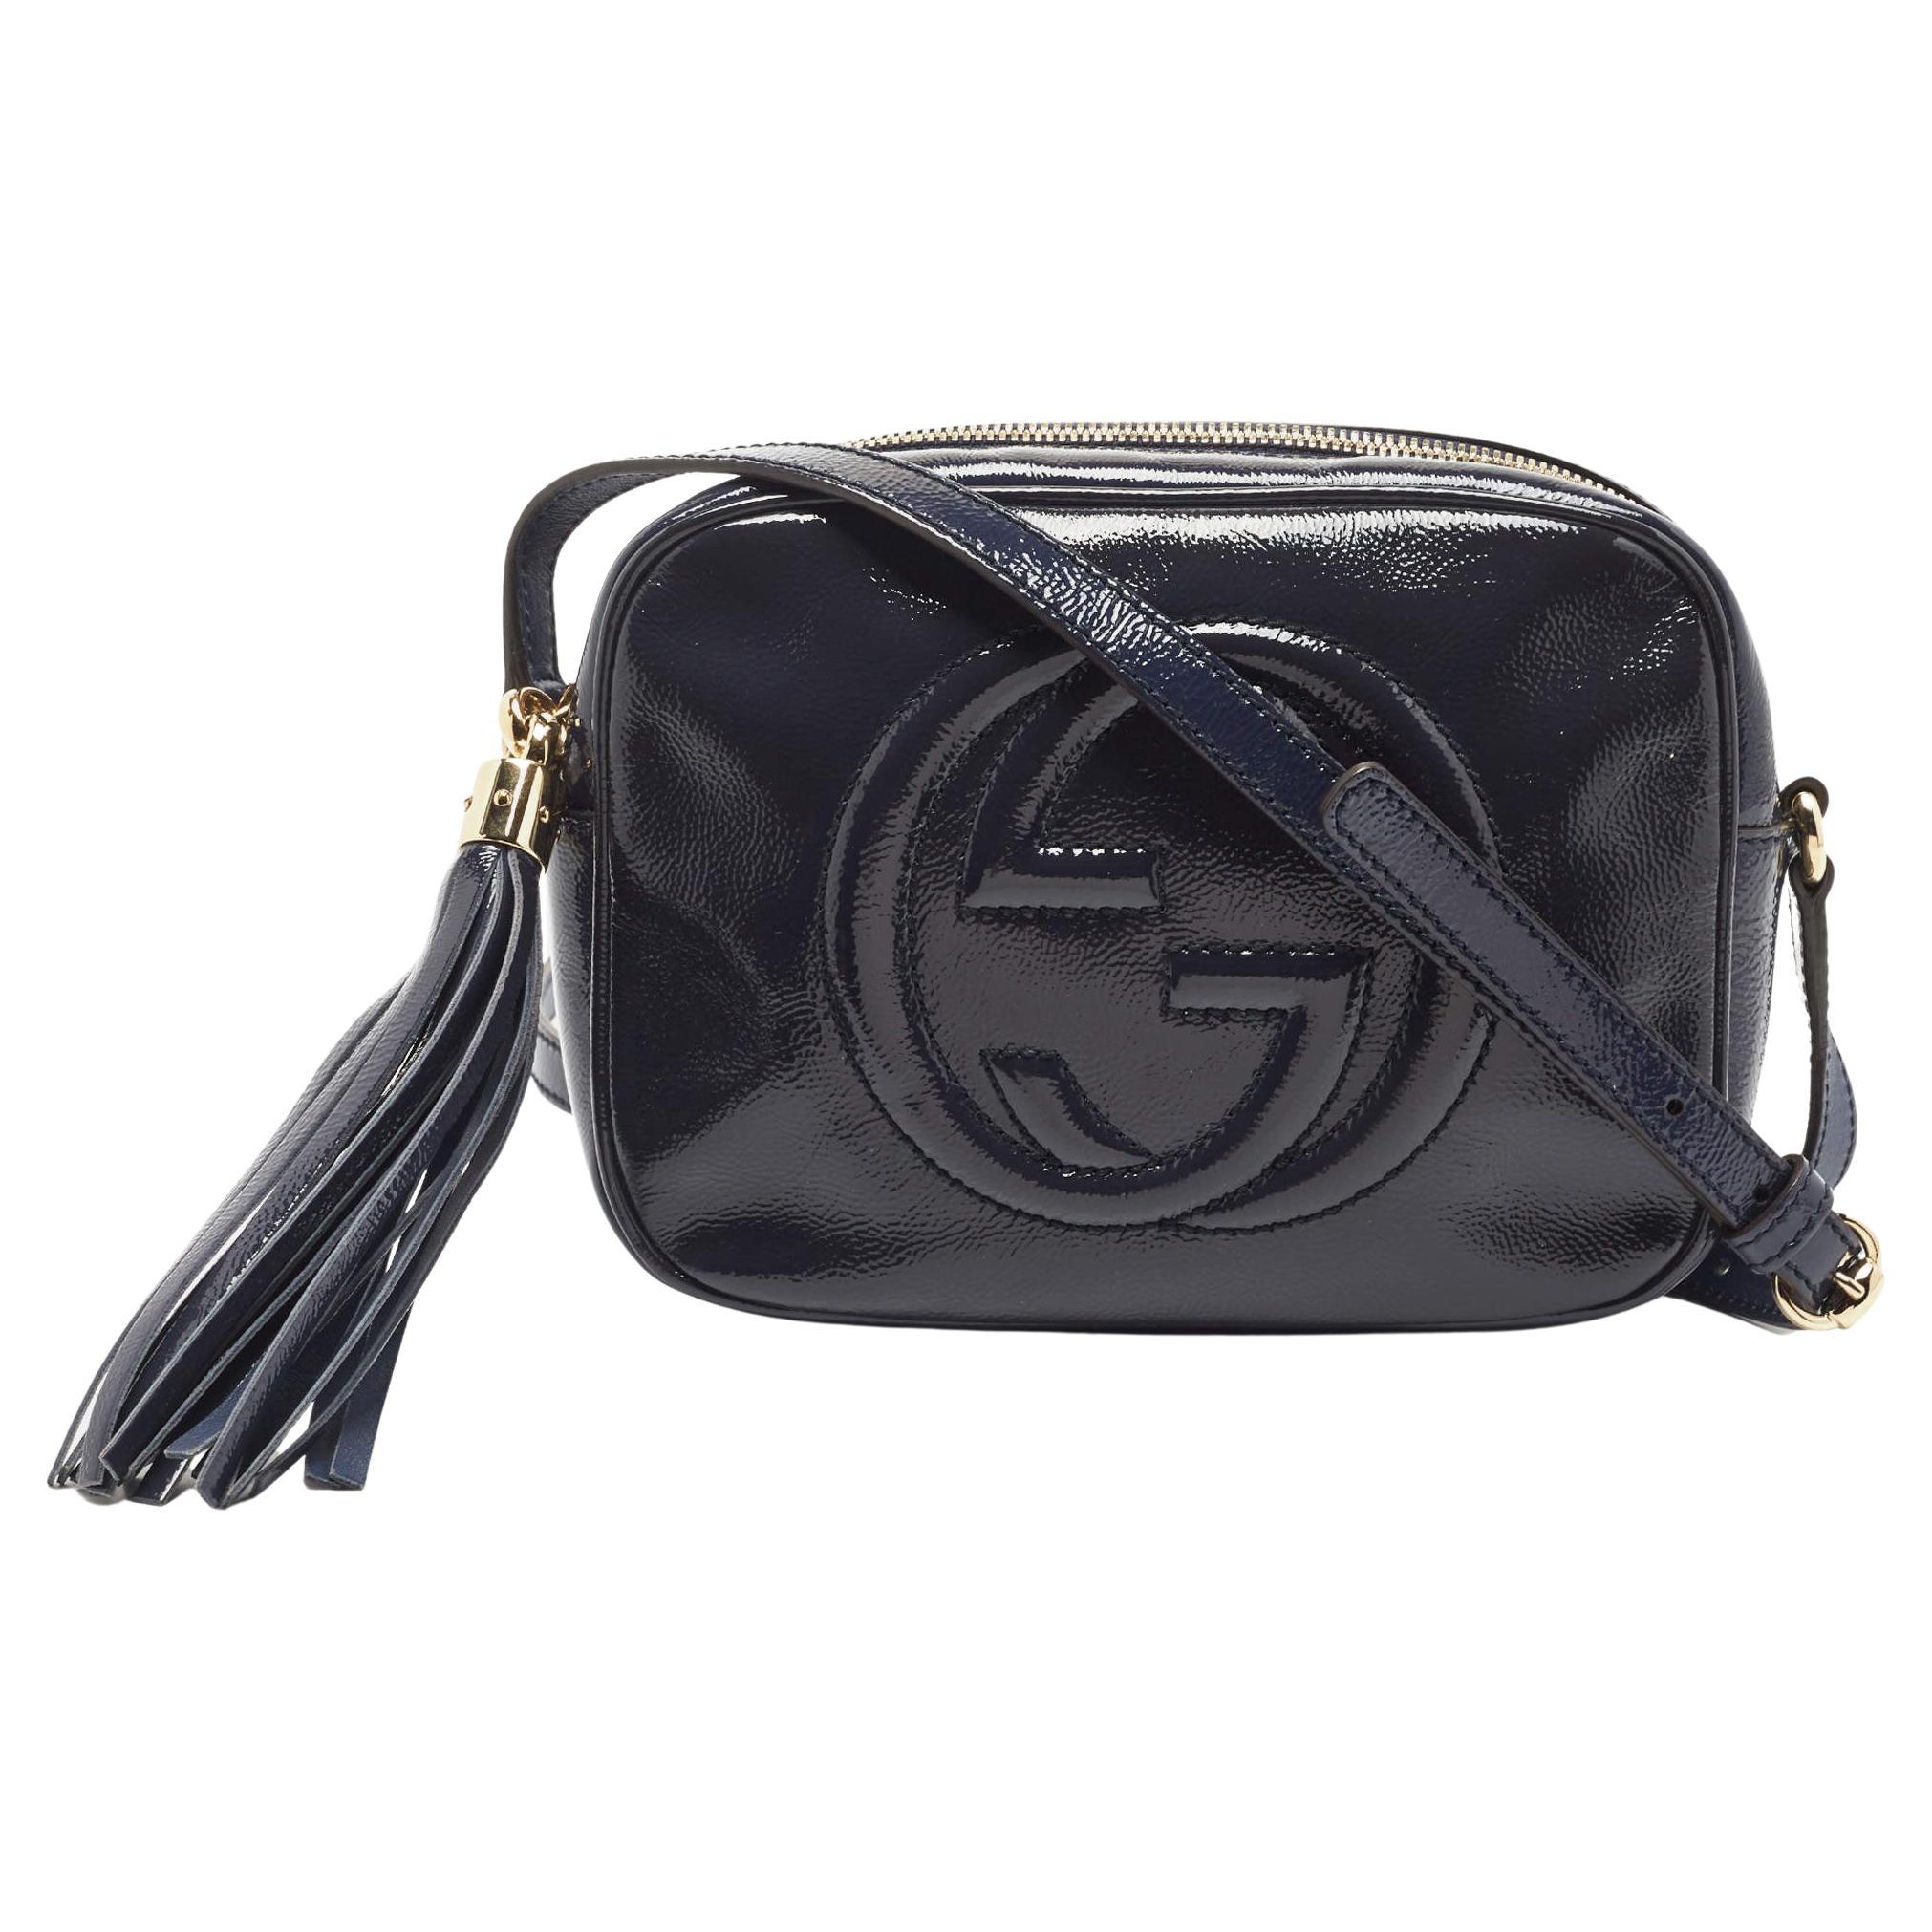 Gucci Soho Flap Bag Black Patent Leather